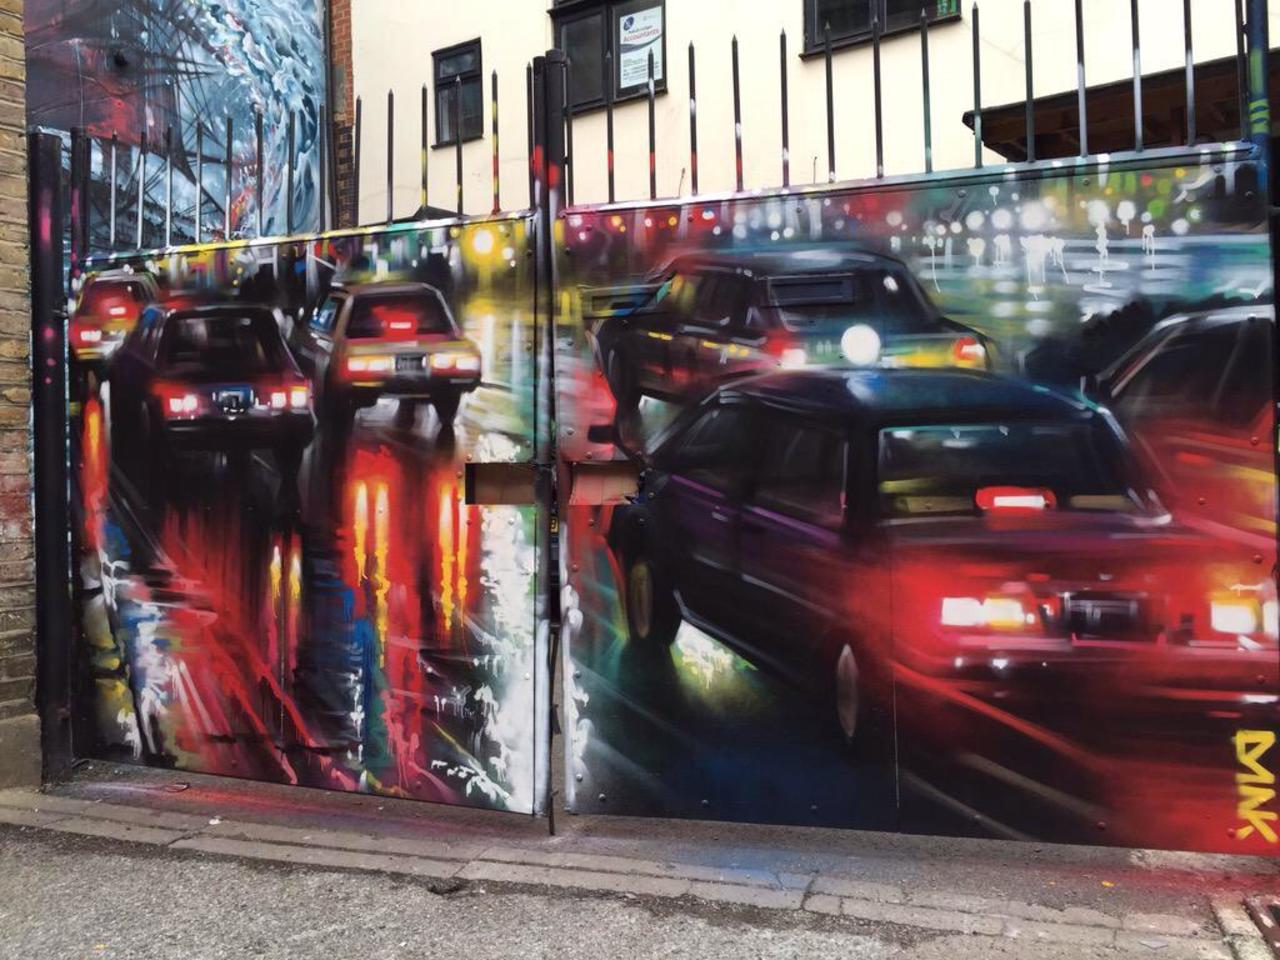 New Street Art by DanKitchener in Brick Lane London 

#art #graffiti #mural #streetart http://t.co/86bvWWKUz1